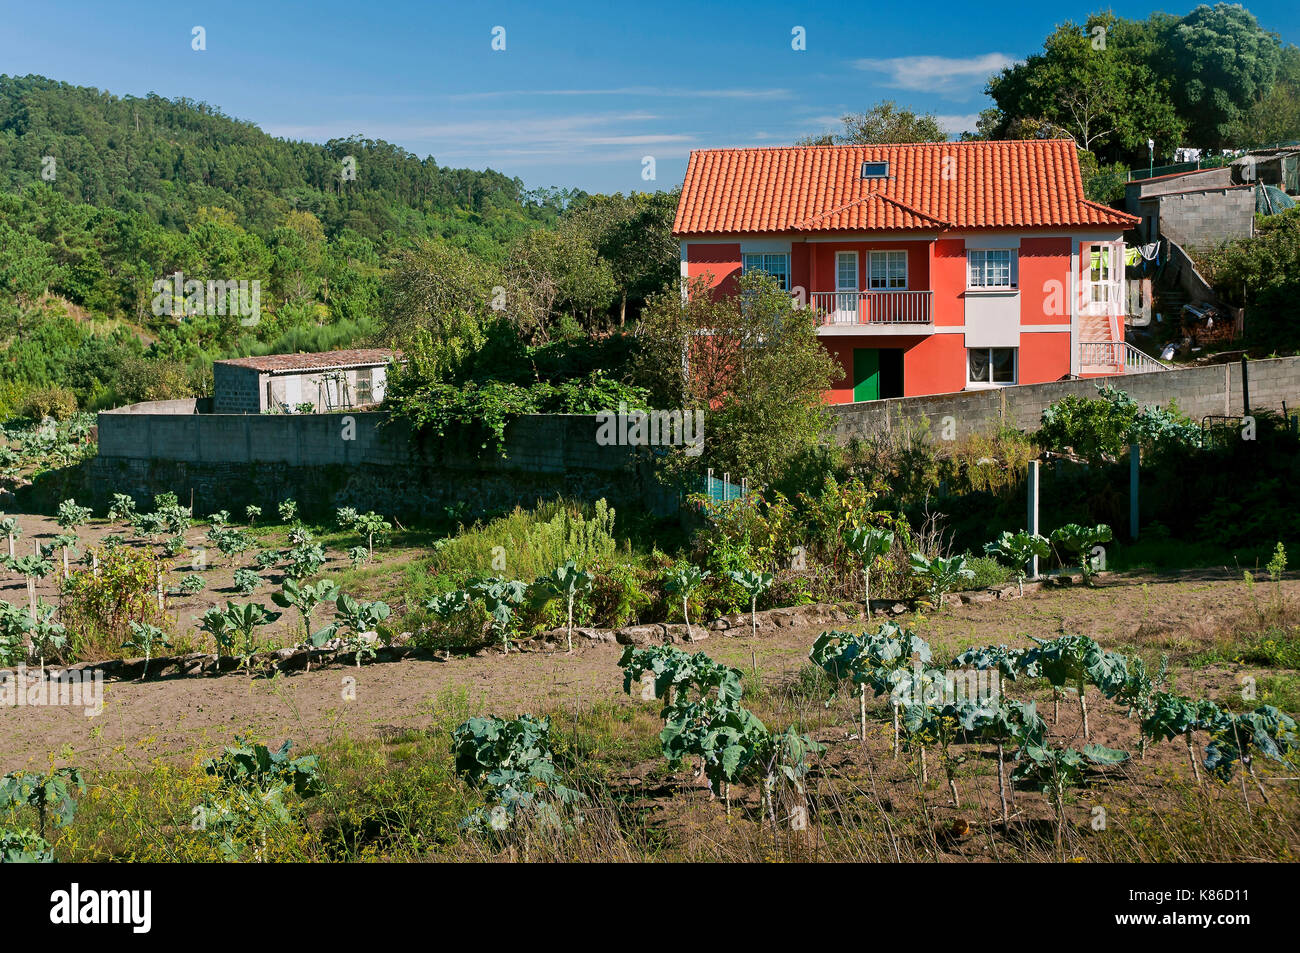 Farmhouse, Donon, Pontevedra province, Region of Galicia, Spain, Europe Stock Photo